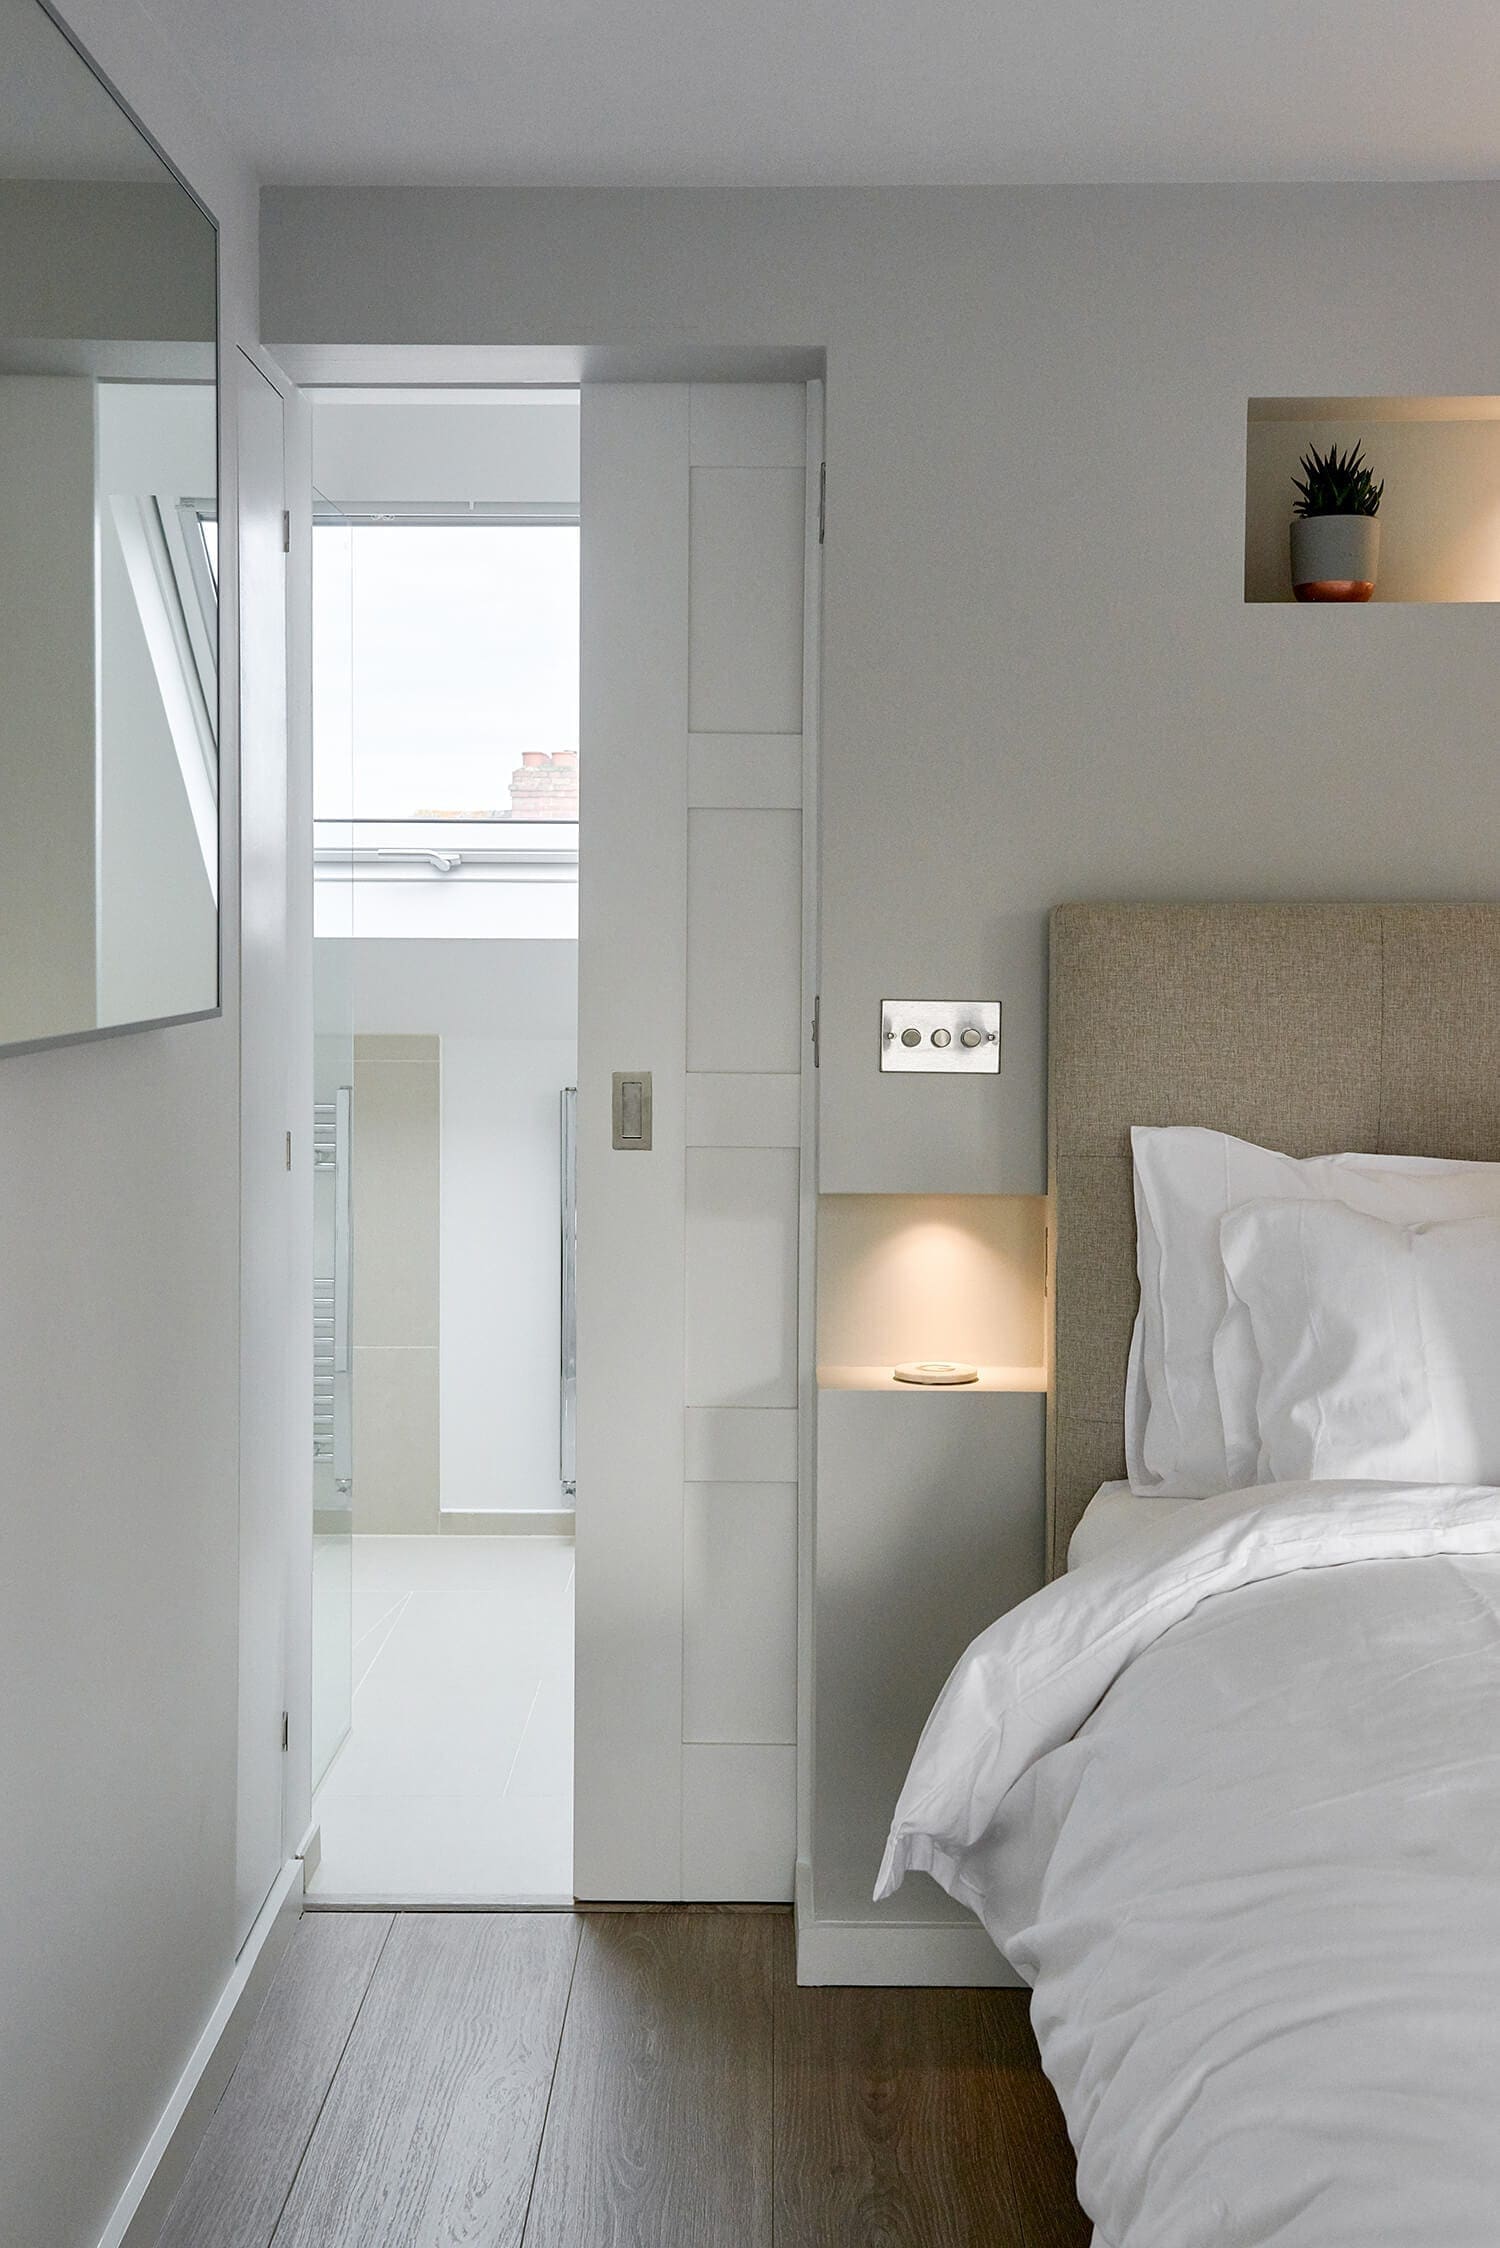 space-saving internal door separates loft bedroom from ensuite